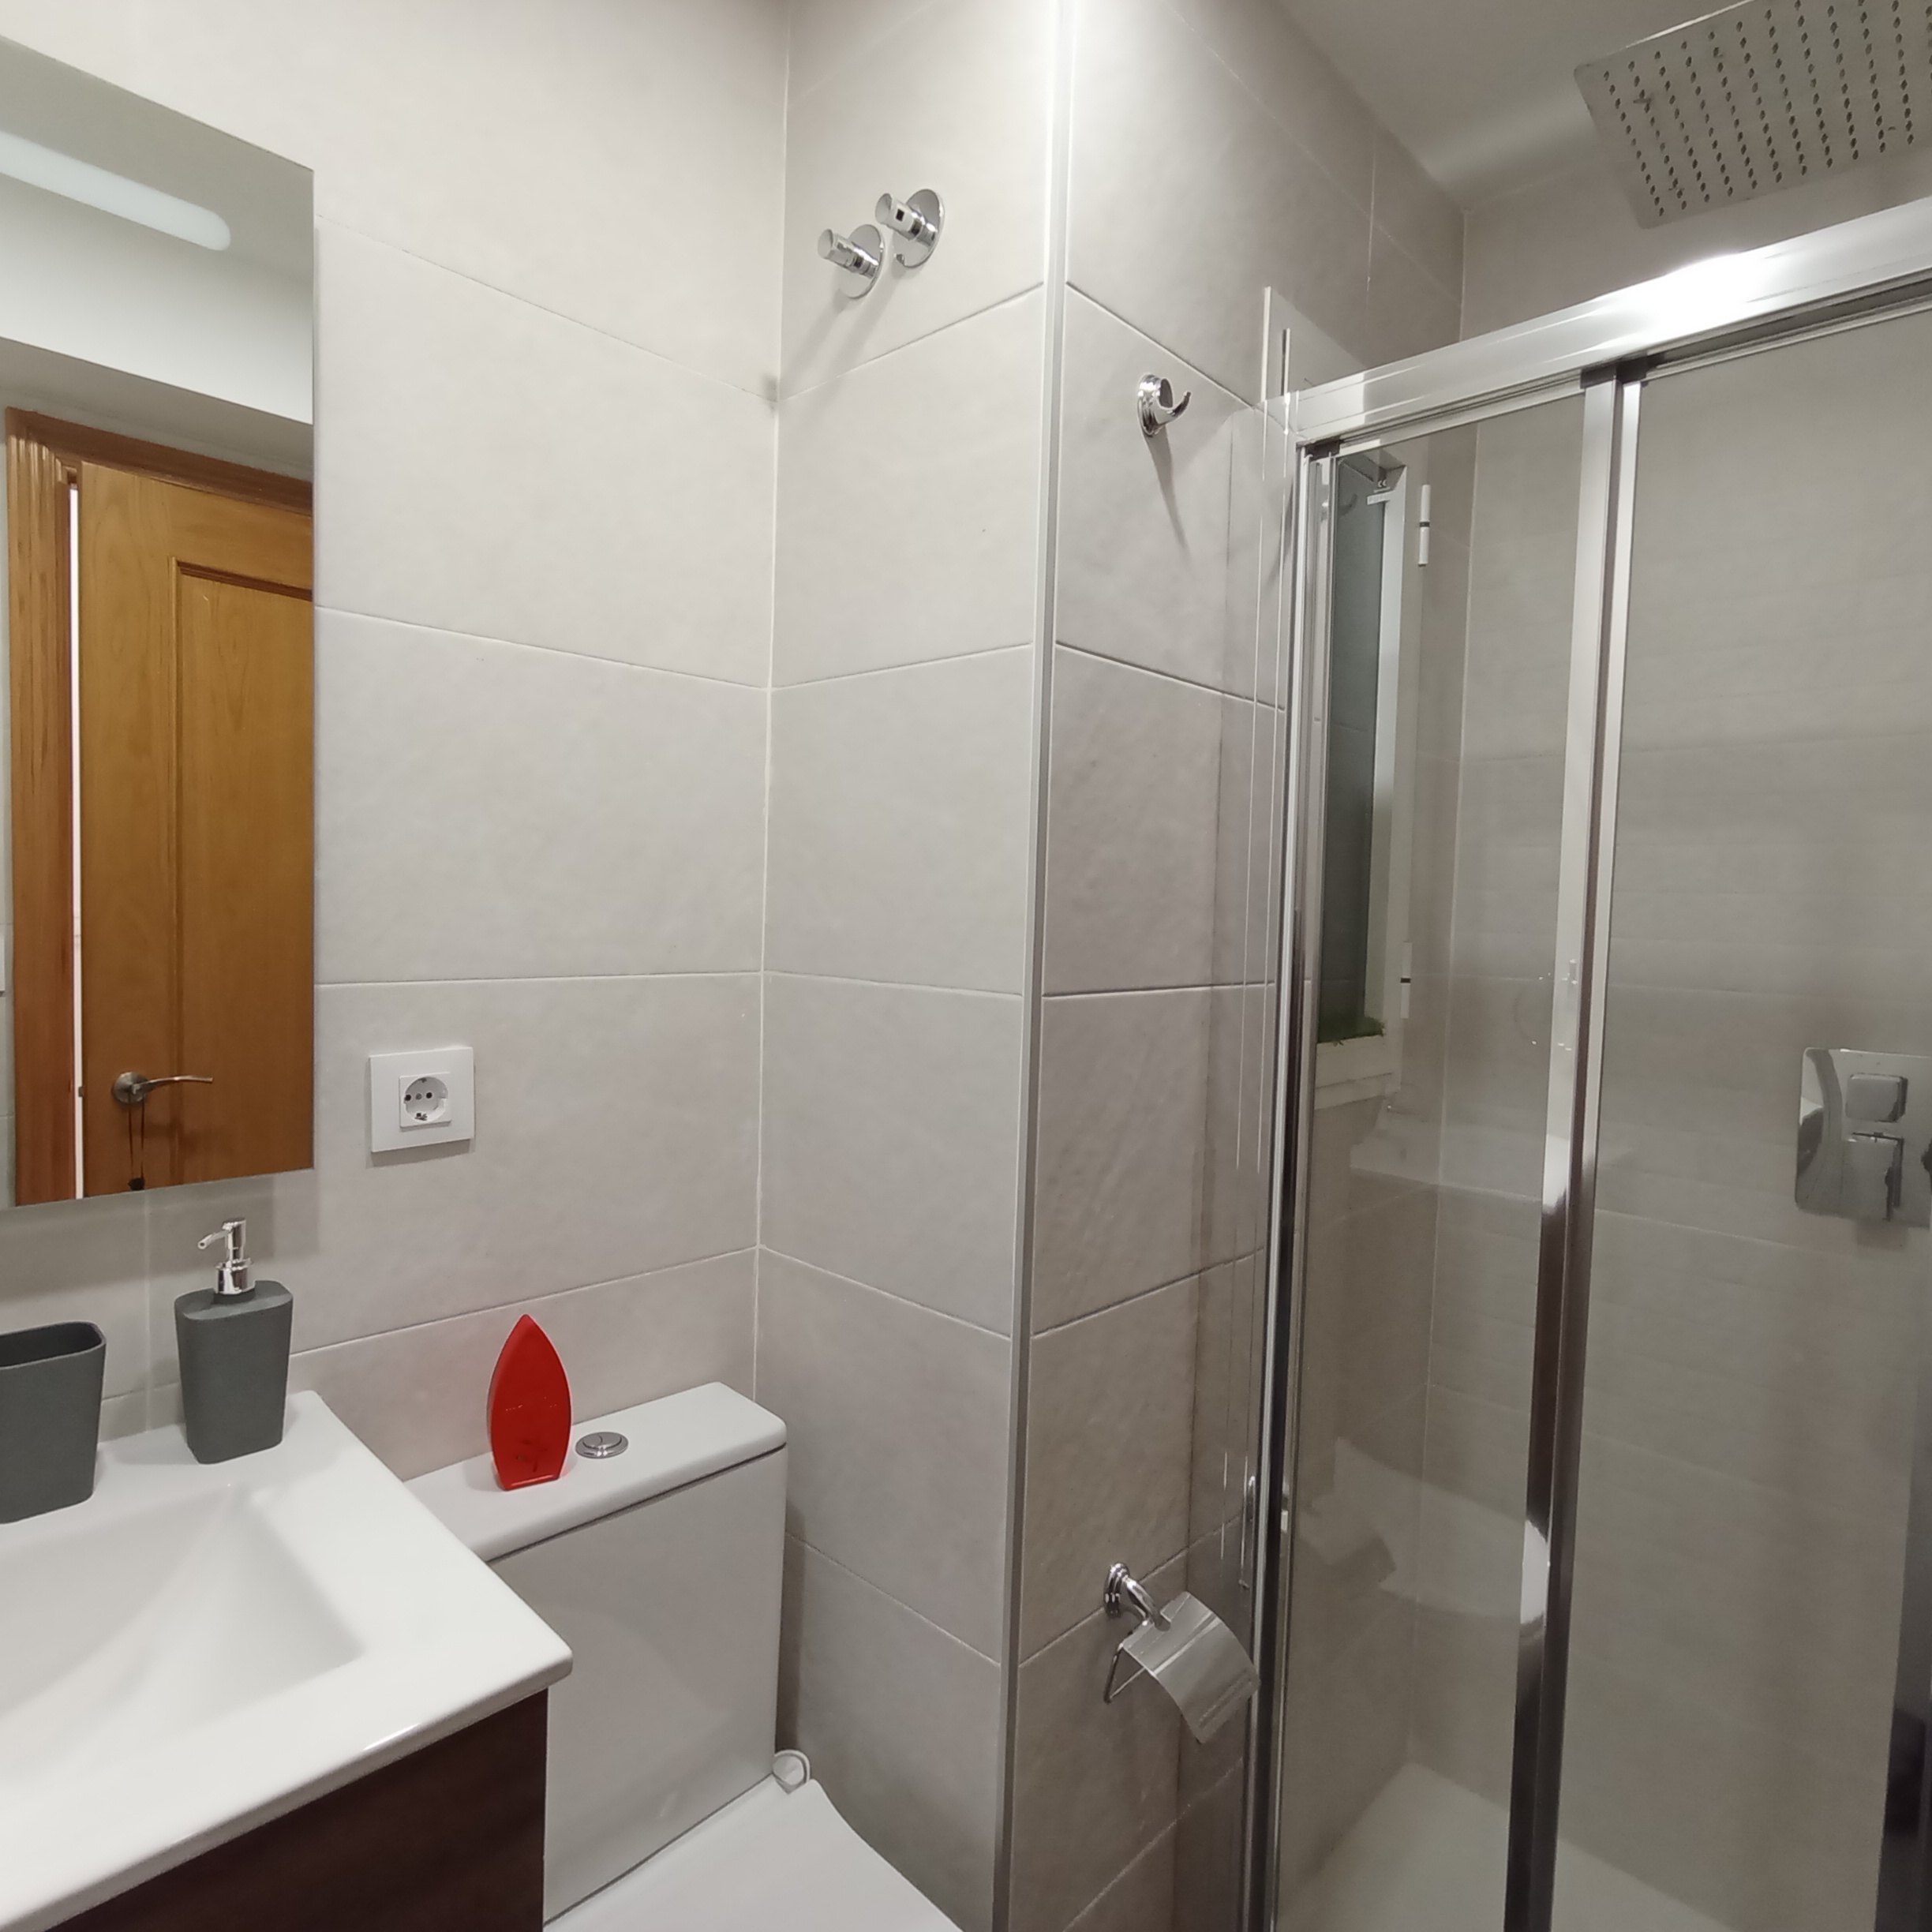 Trafalgar - 3 Bedroom apartment for rent in Valencia bathroom